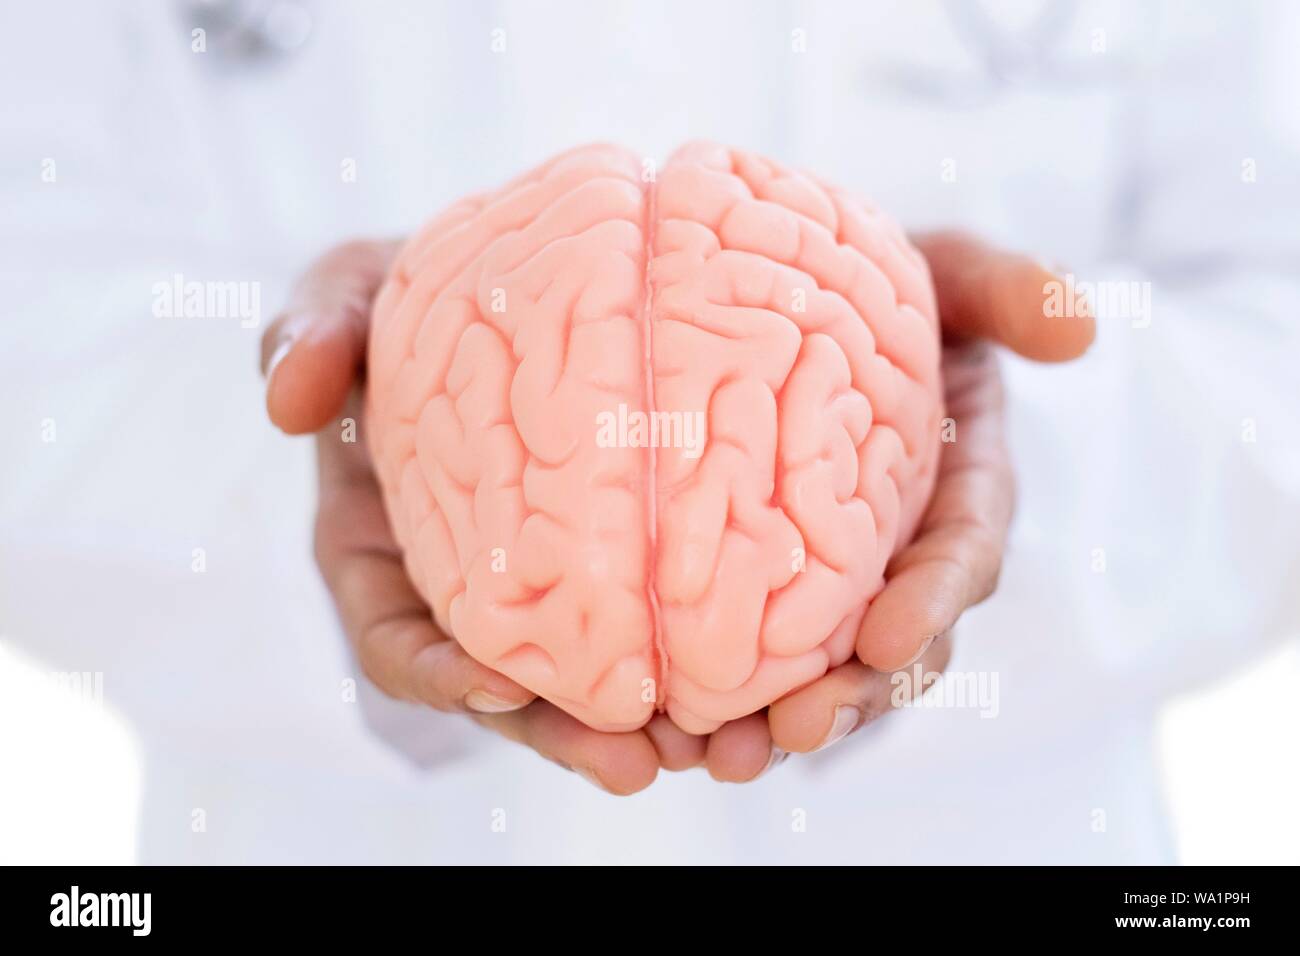 Neurologist holding brain model, close-up. Stock Photo